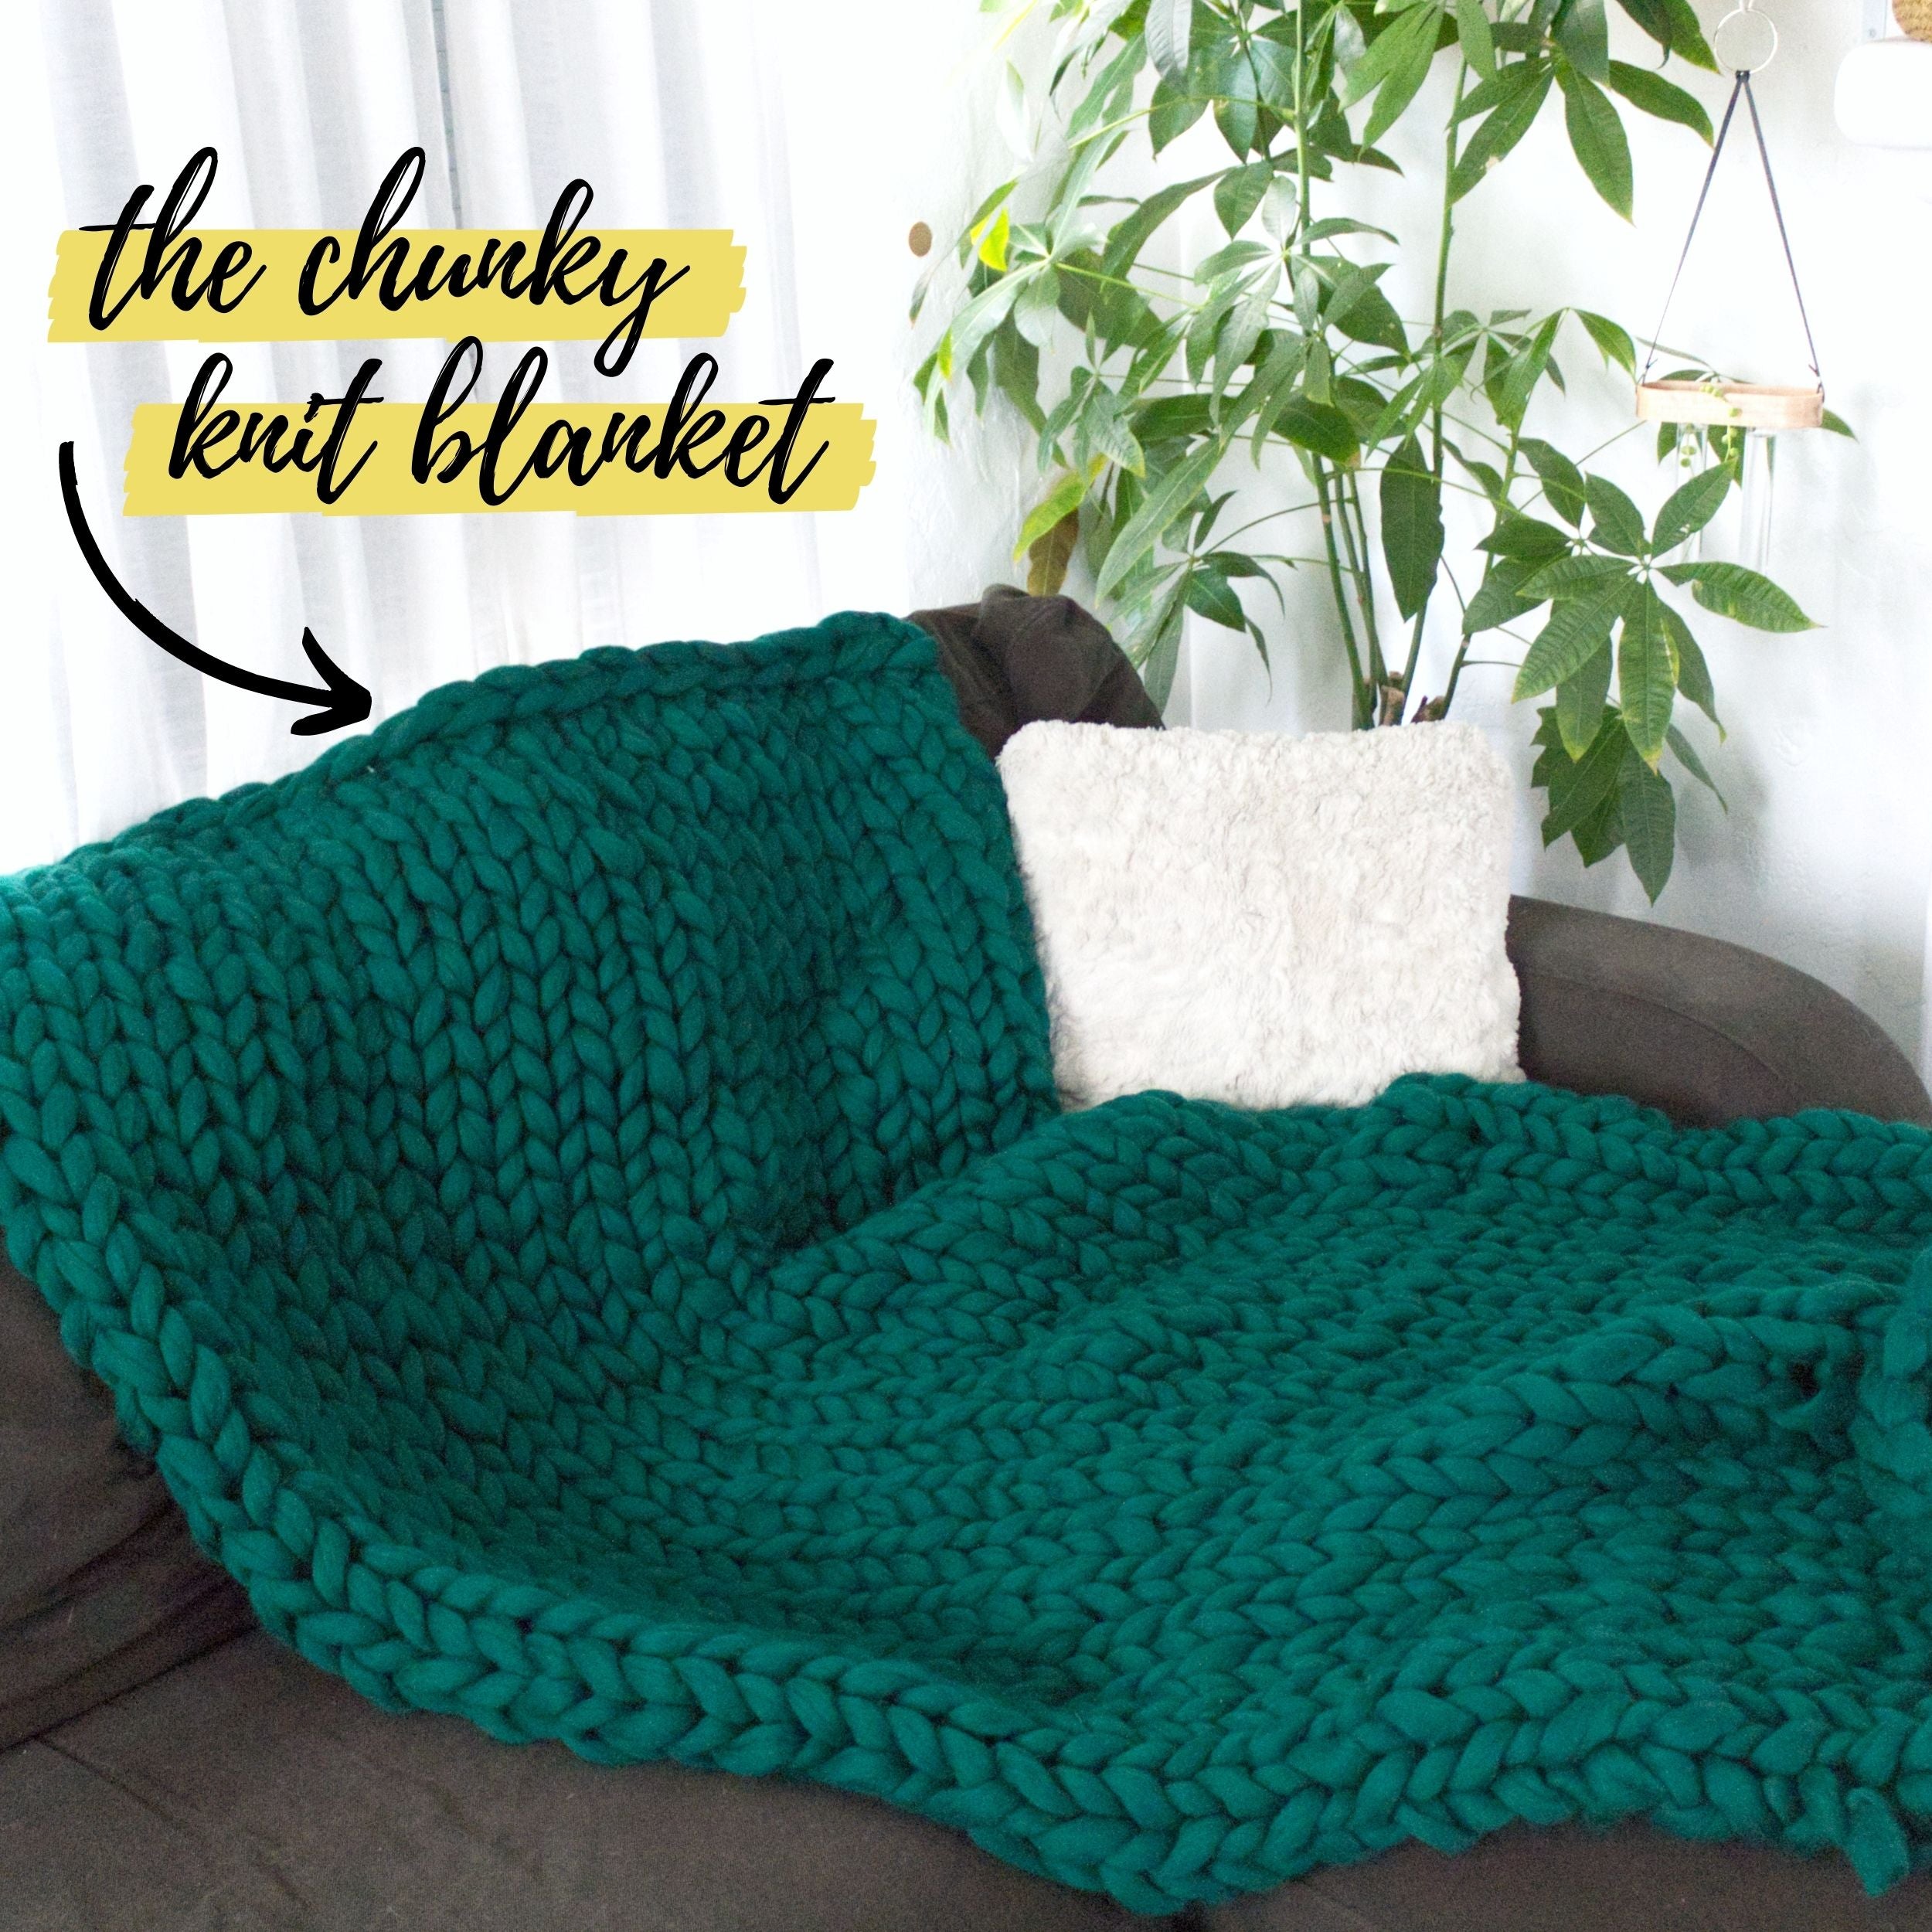 The DIY chunky knit blanket